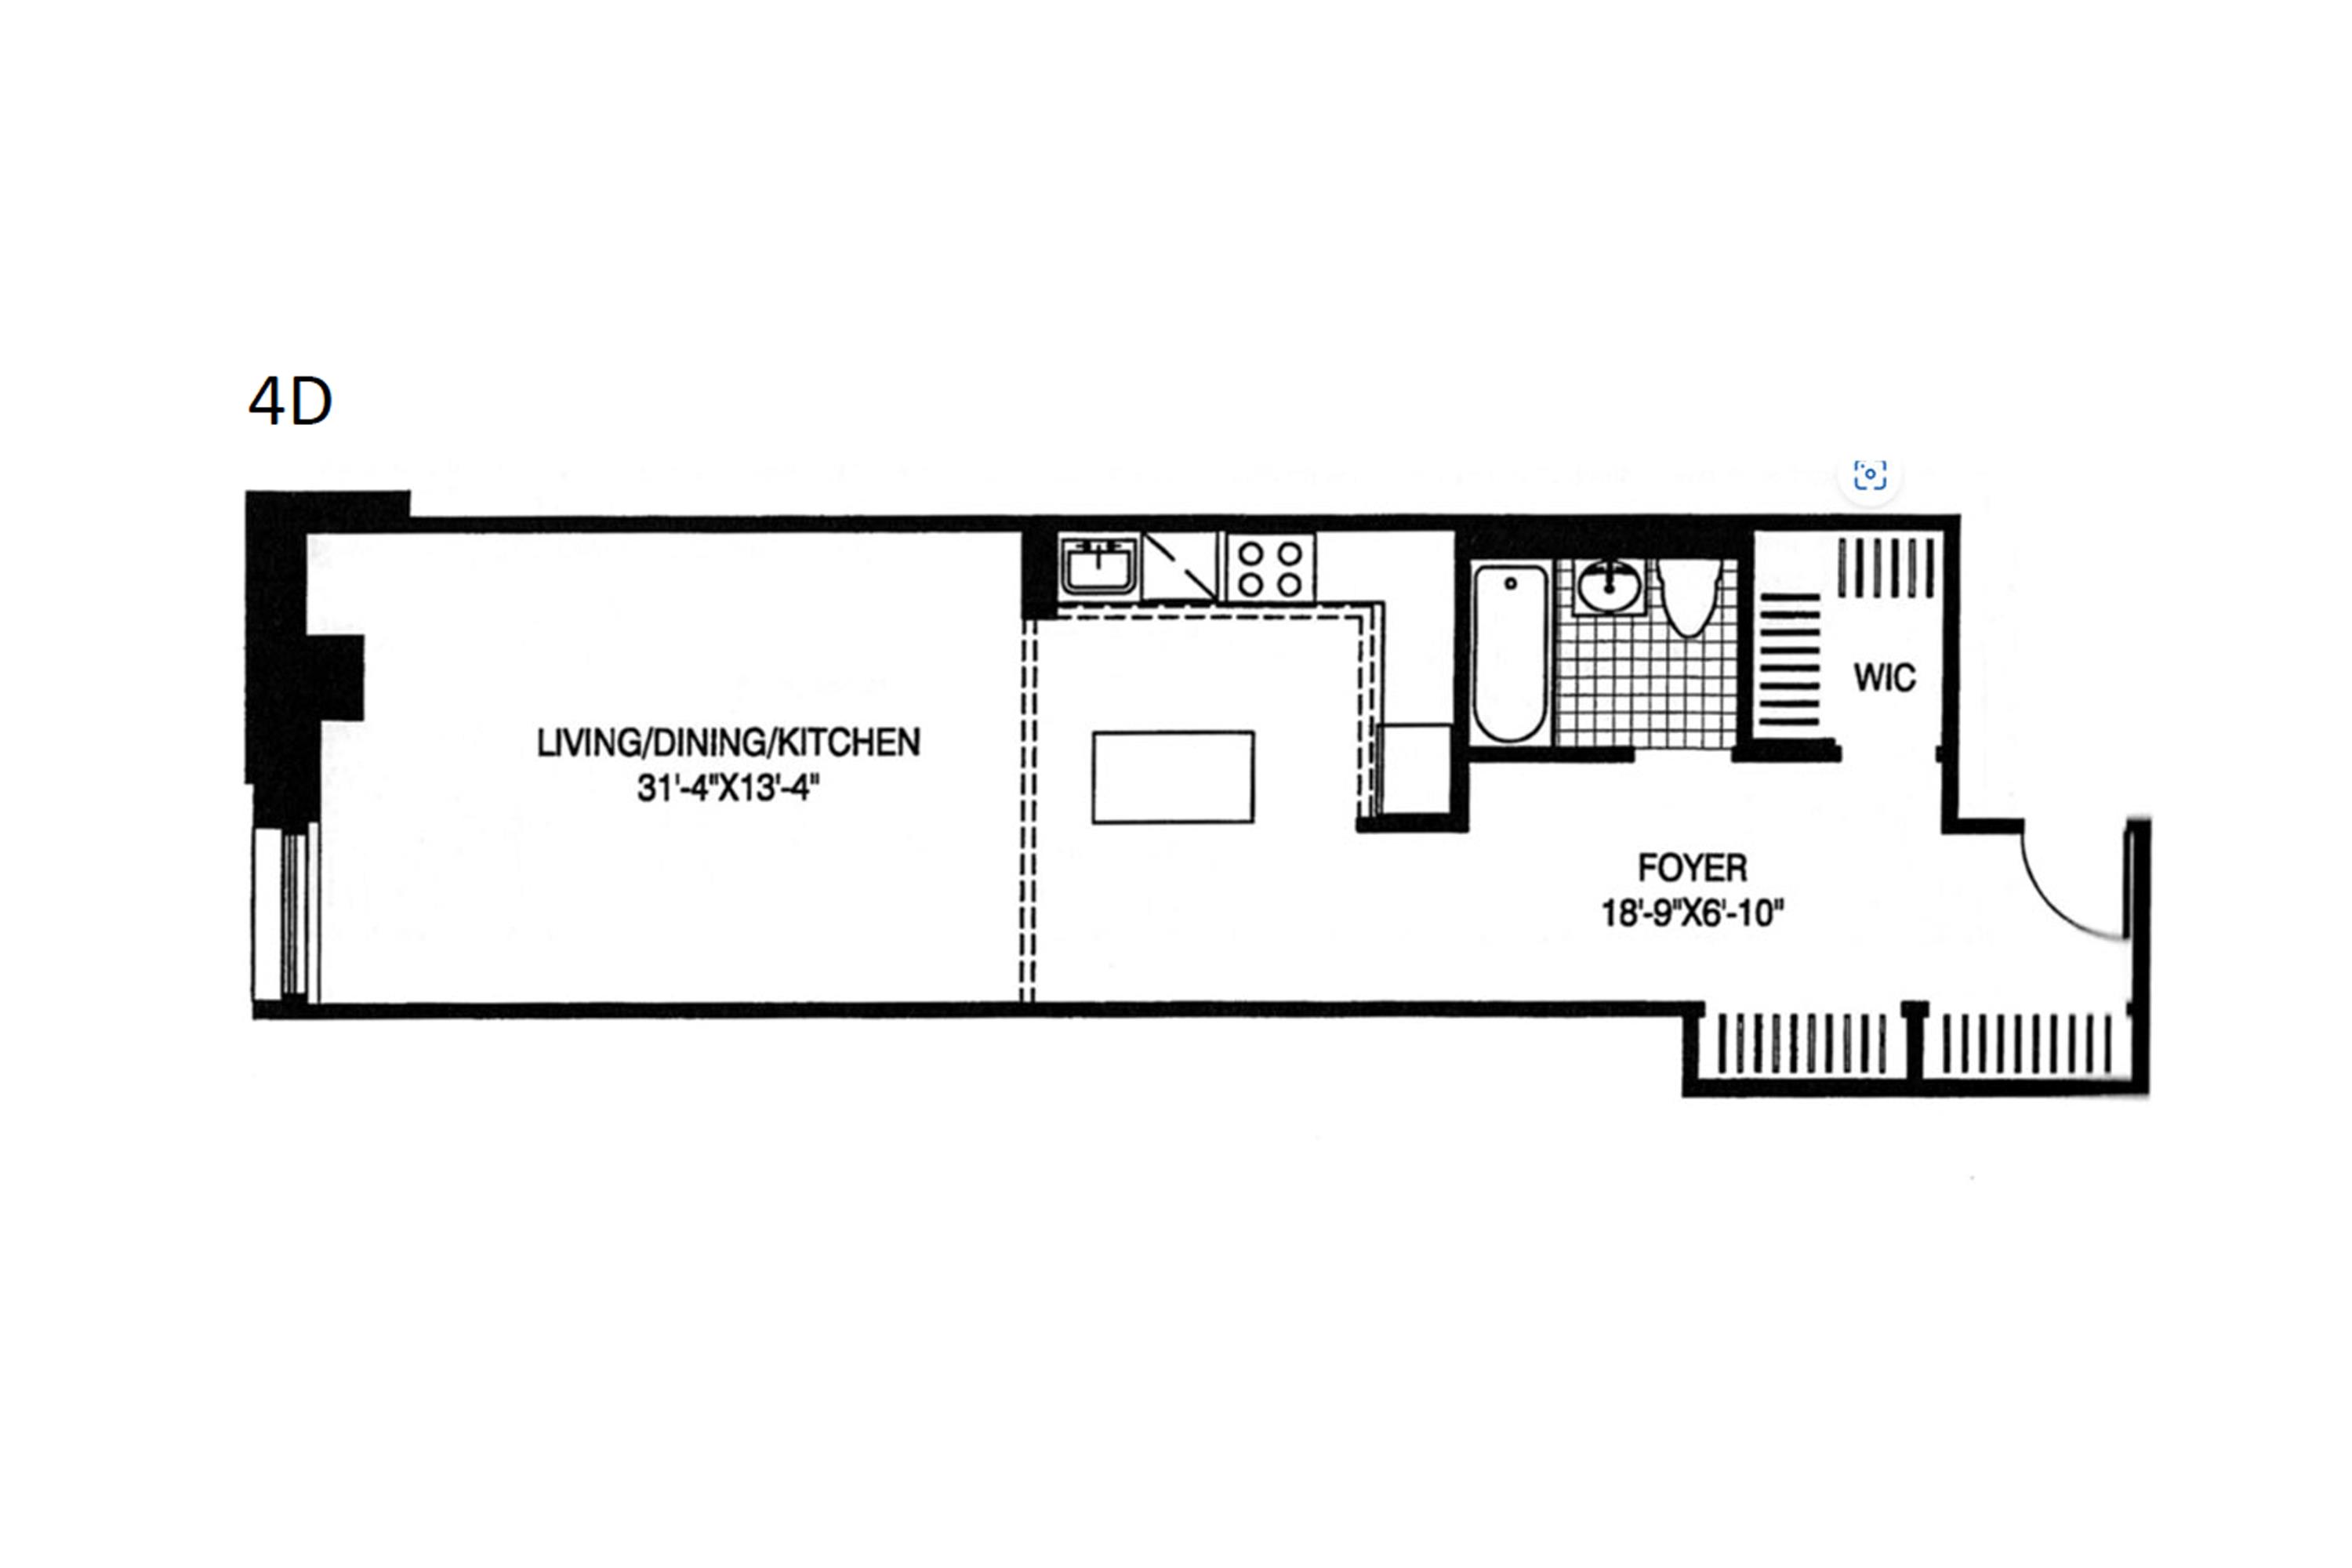 Floorplan for 20 West Street, 4-D